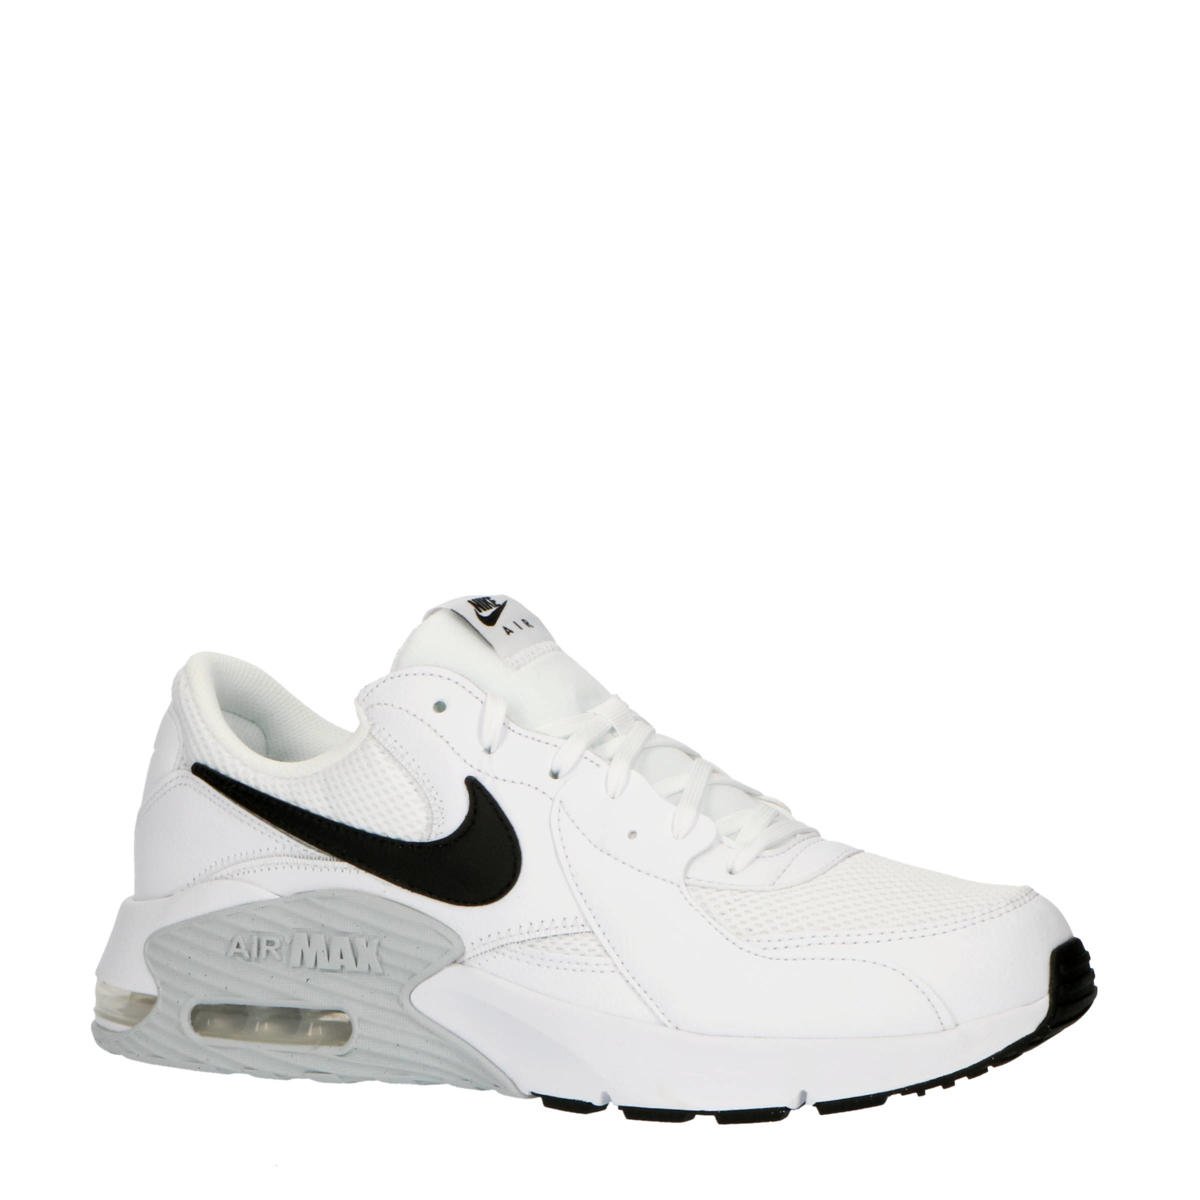 ernstig ontslaan Kleren Nike Air Max Excee sneakers wit/zwart/zilver | wehkamp